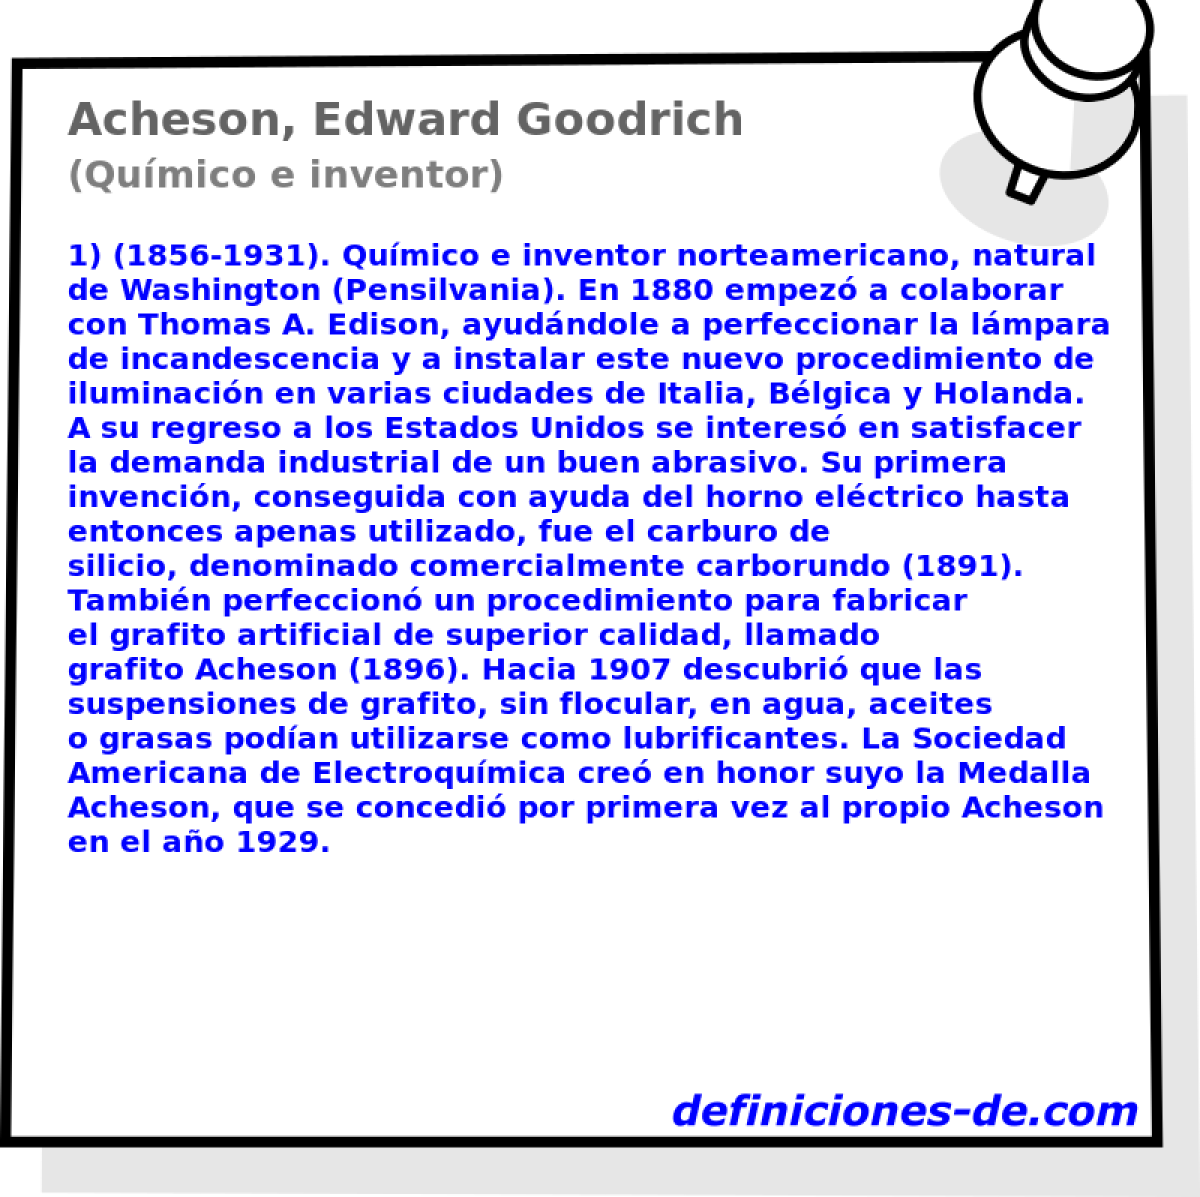 Acheson, Edward Goodrich (Qumico e inventor)